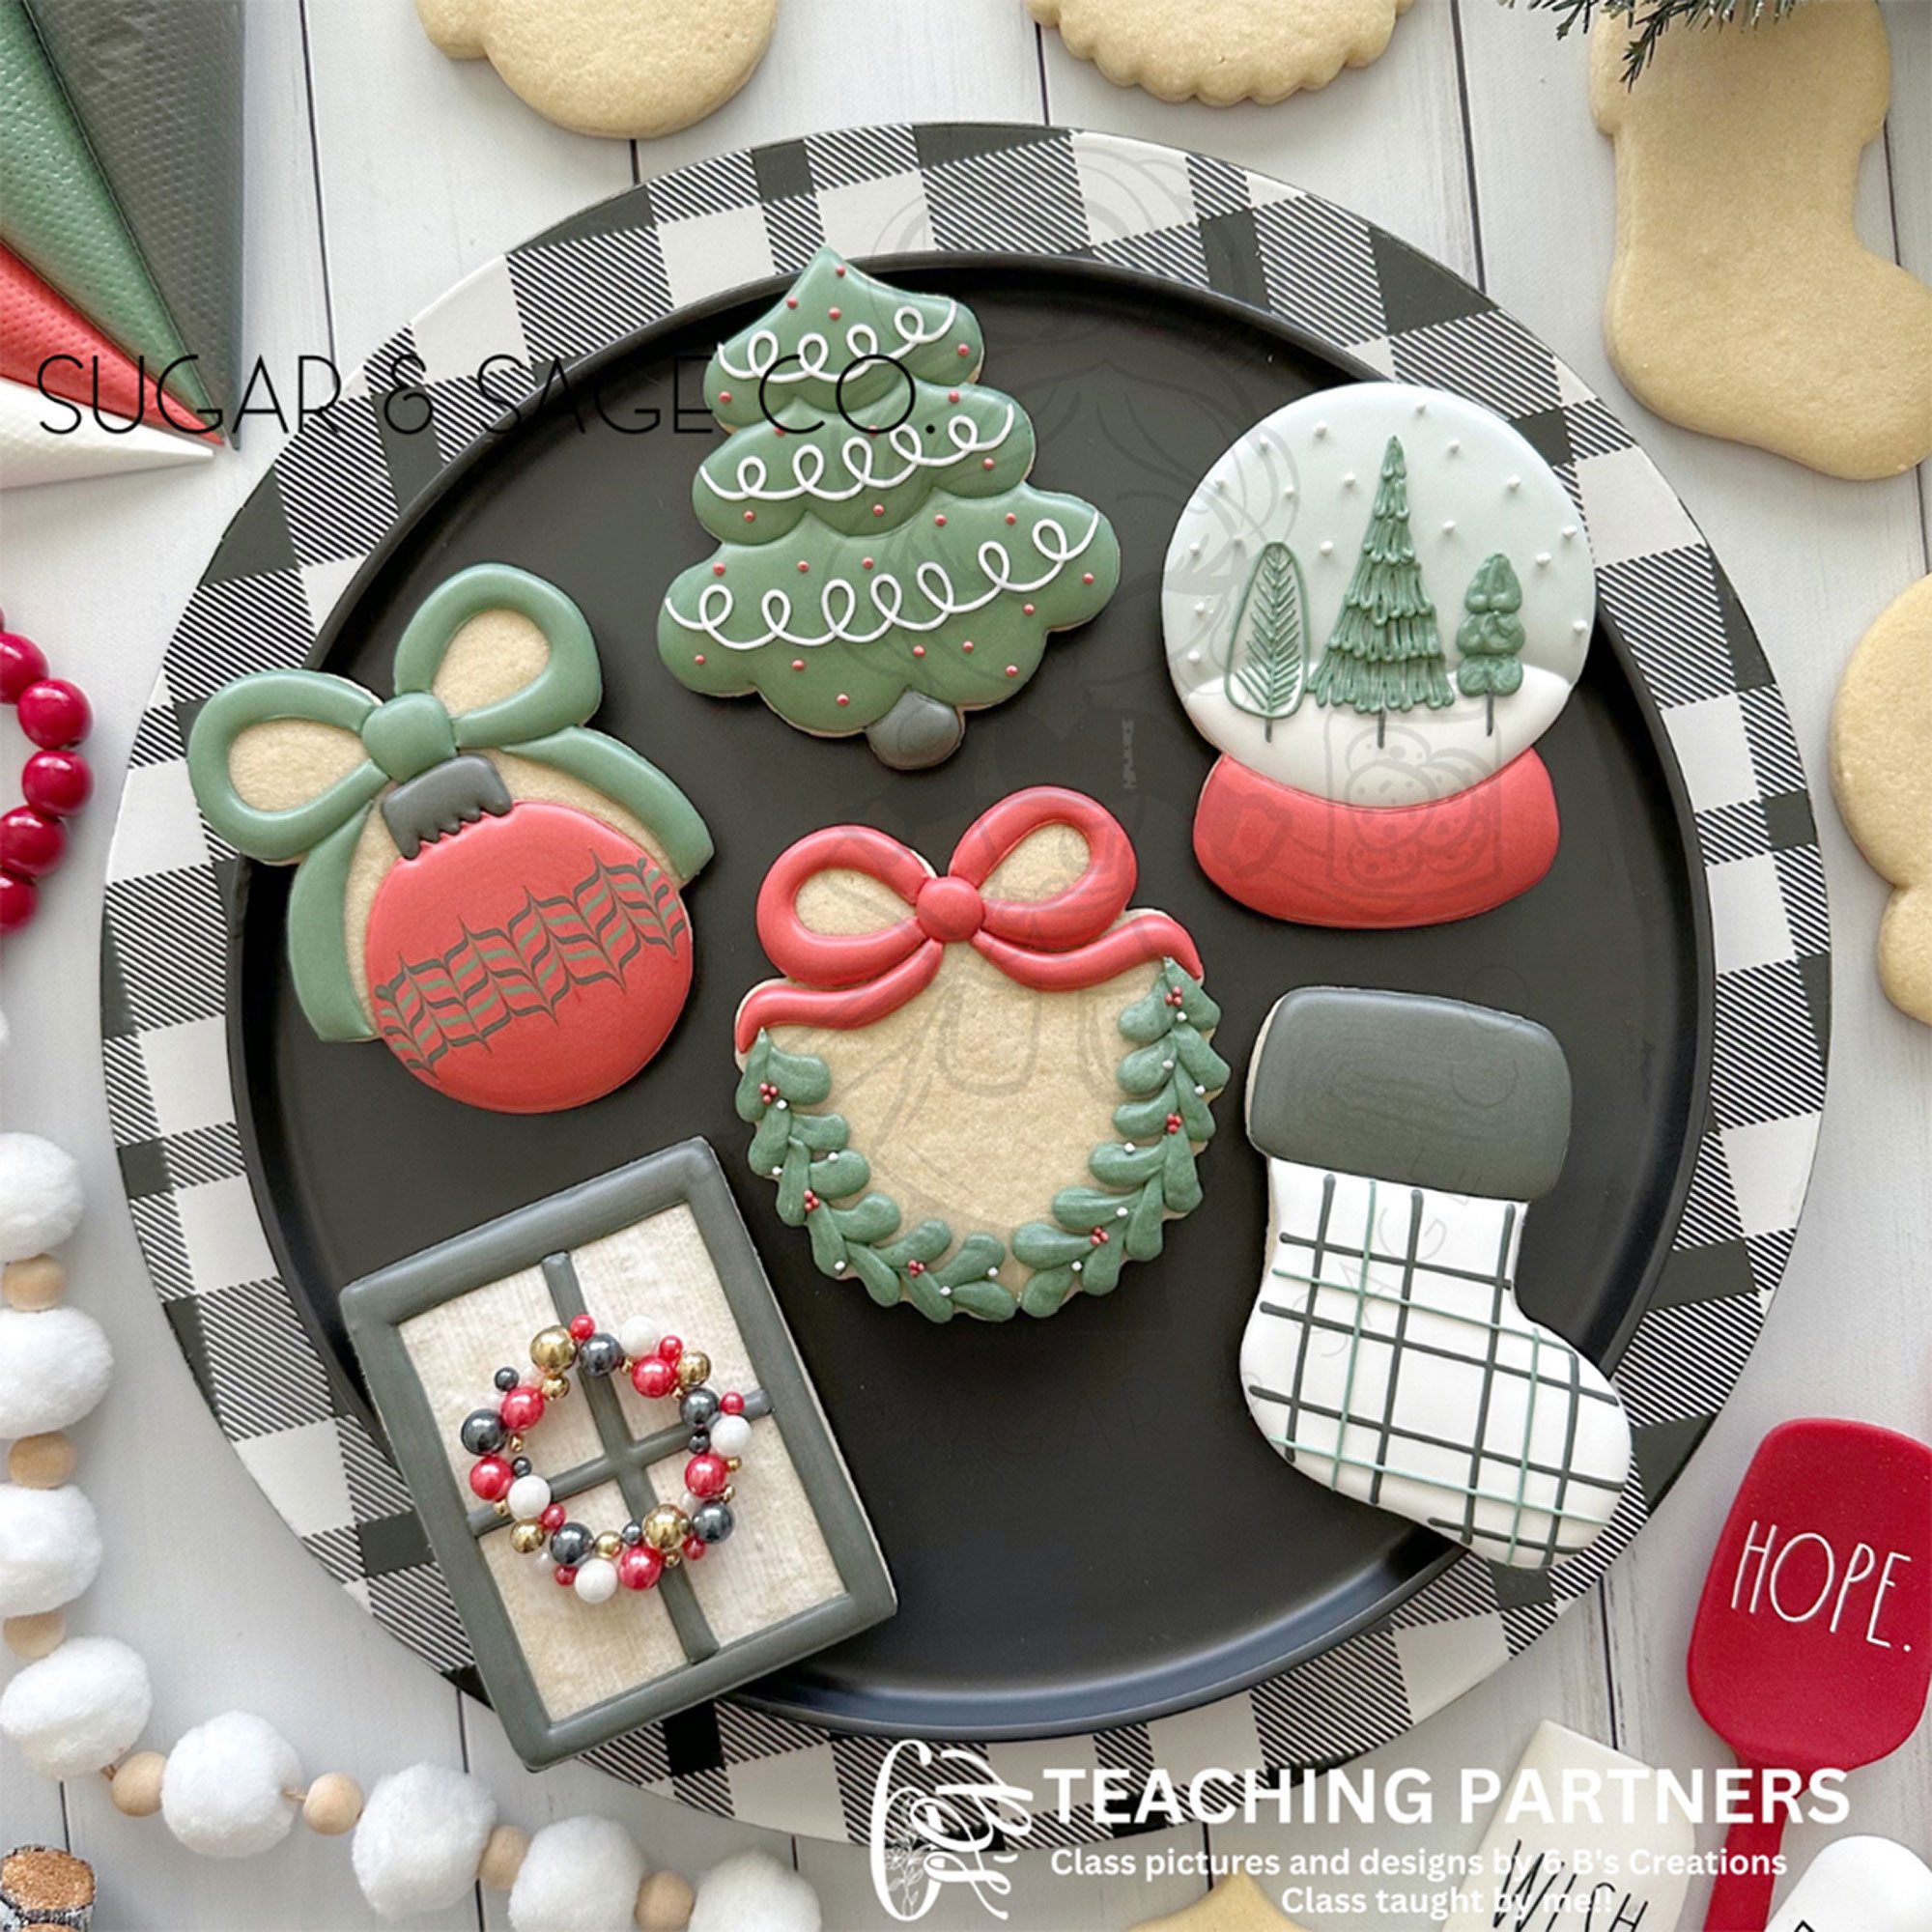 Cookie Decorating - Farmhouse Christmas at The Joyful Gourmet